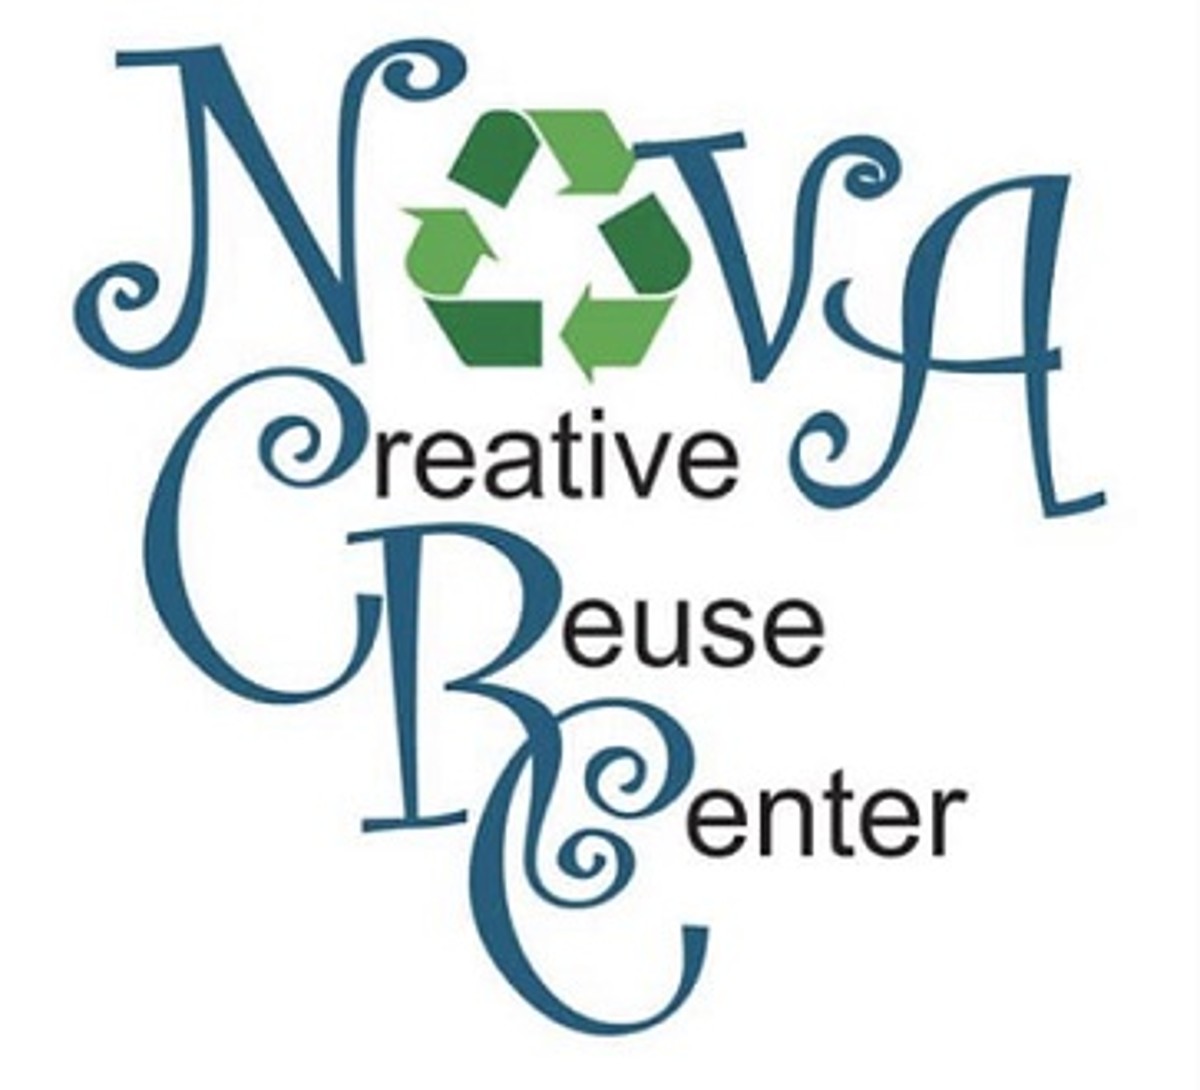 NOVA Creative Reuse Center